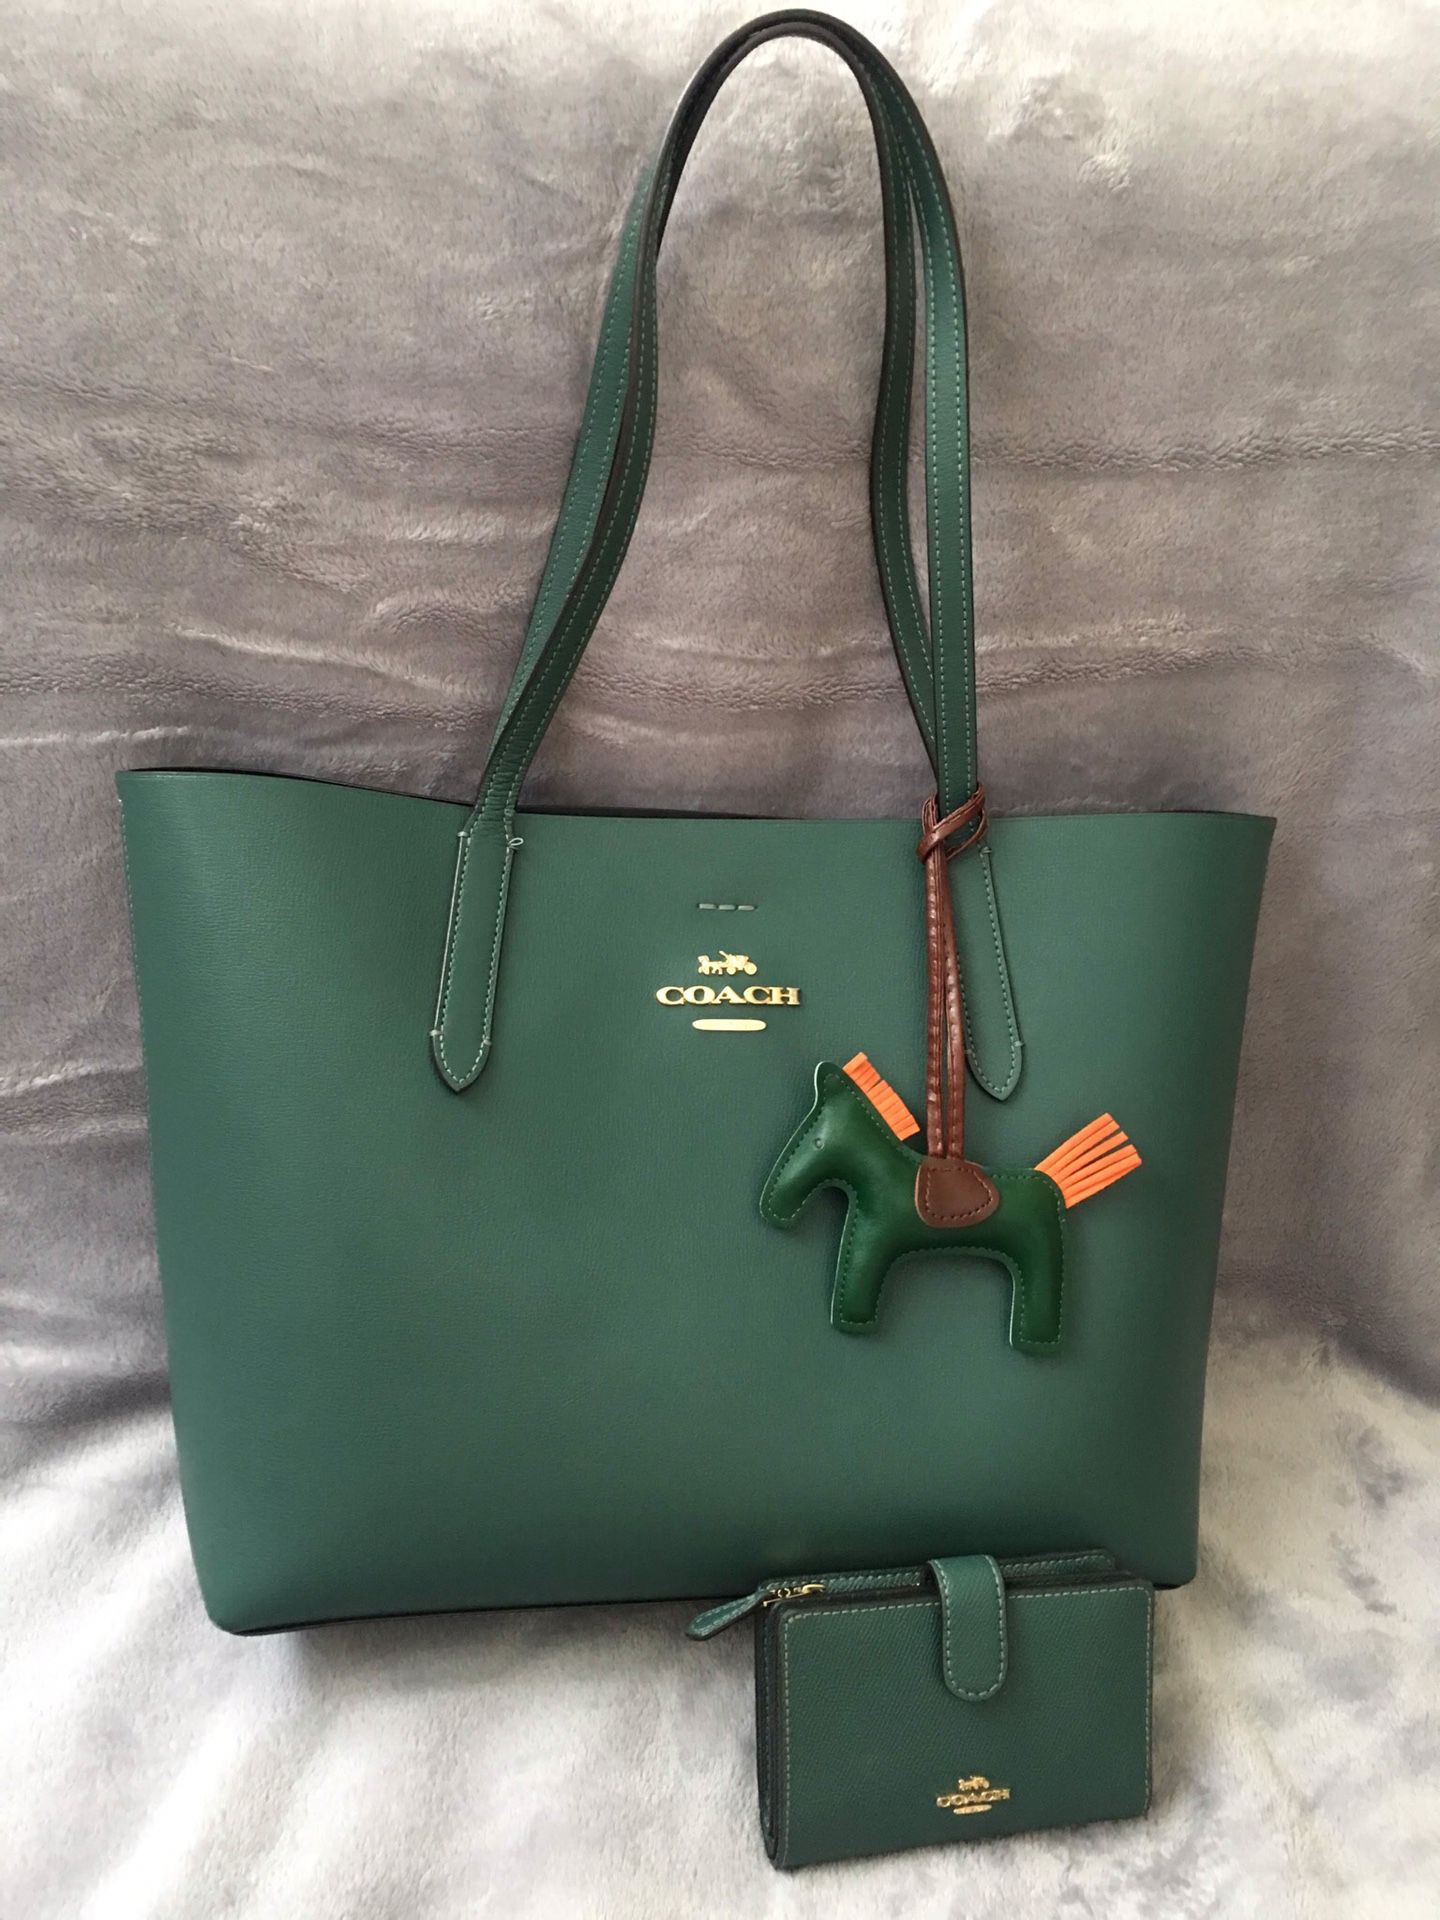 Green Coach tote bag set